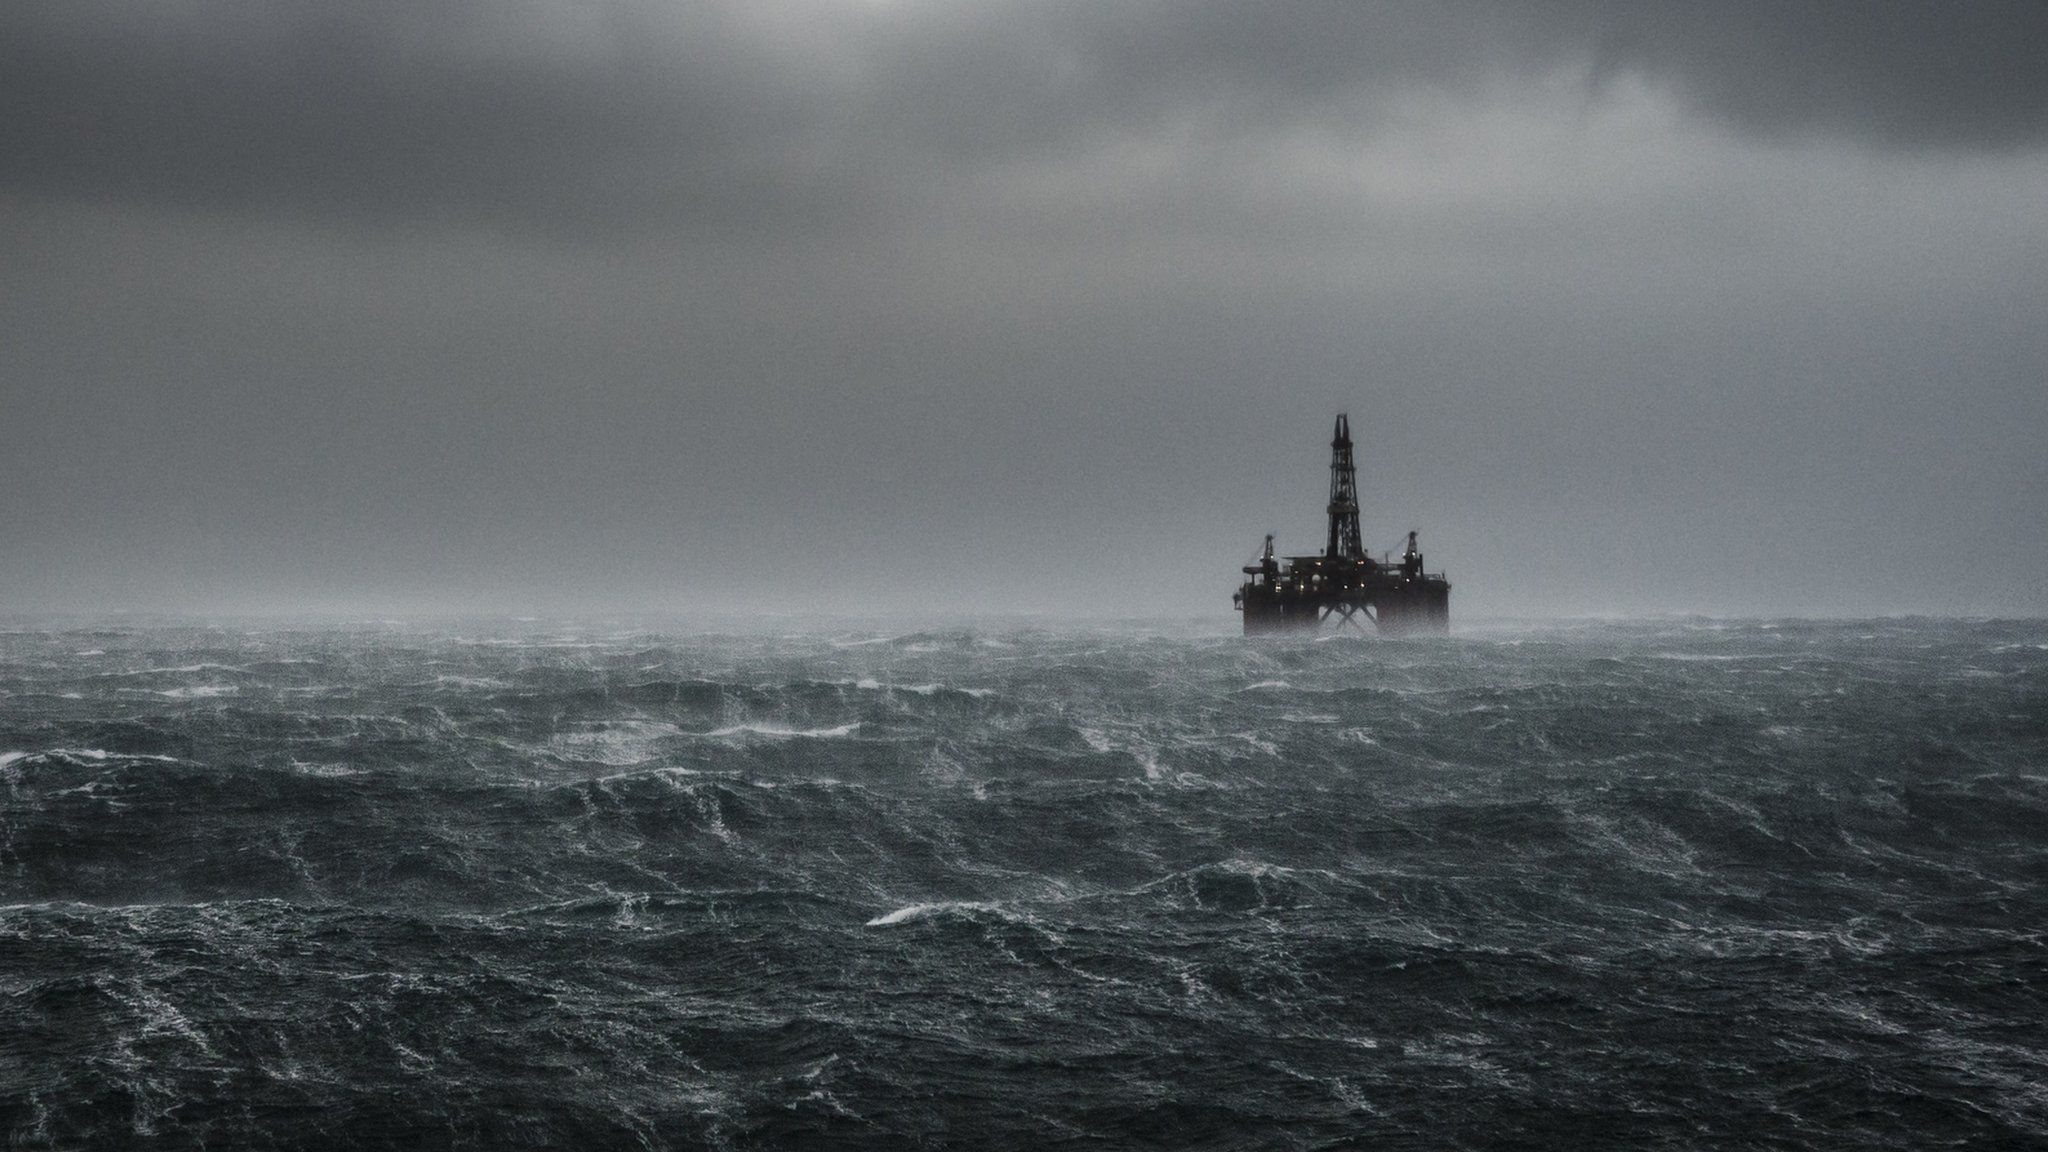 rig in the North Sea